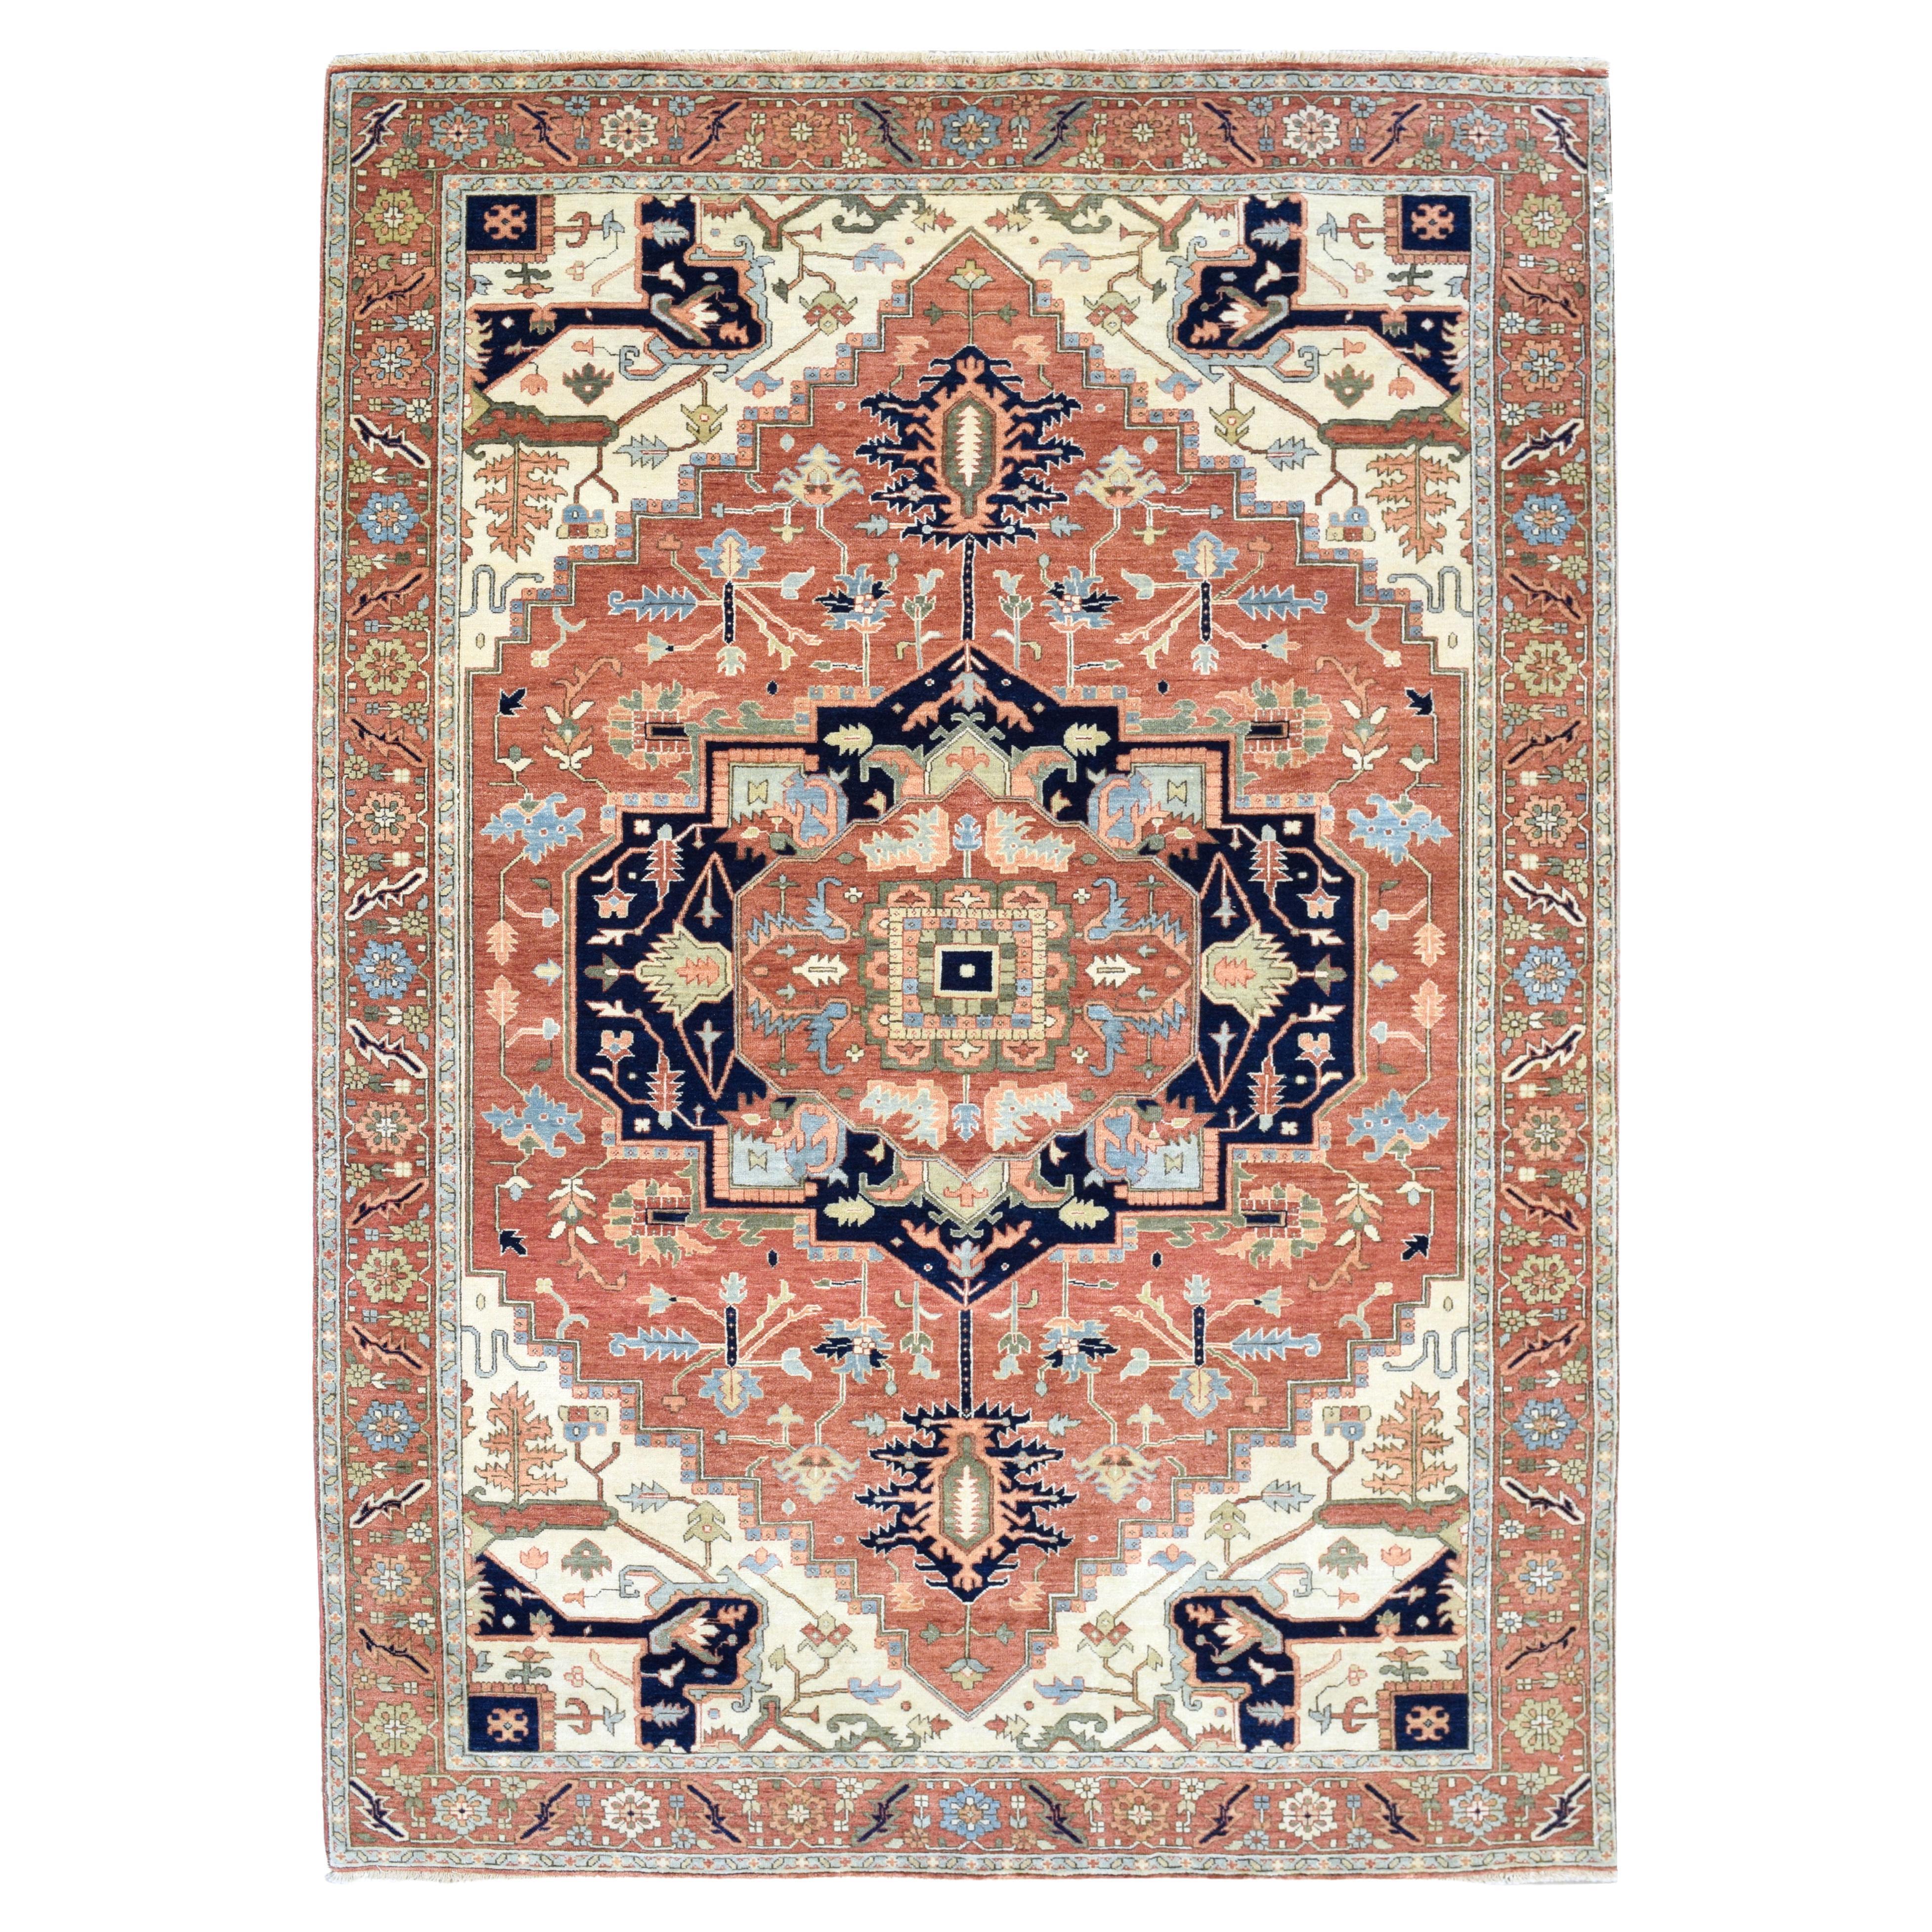 Modern Hand-Knotted Persian Serapi Wool Carpet, Pink, Green, Blue, 6' x 9'